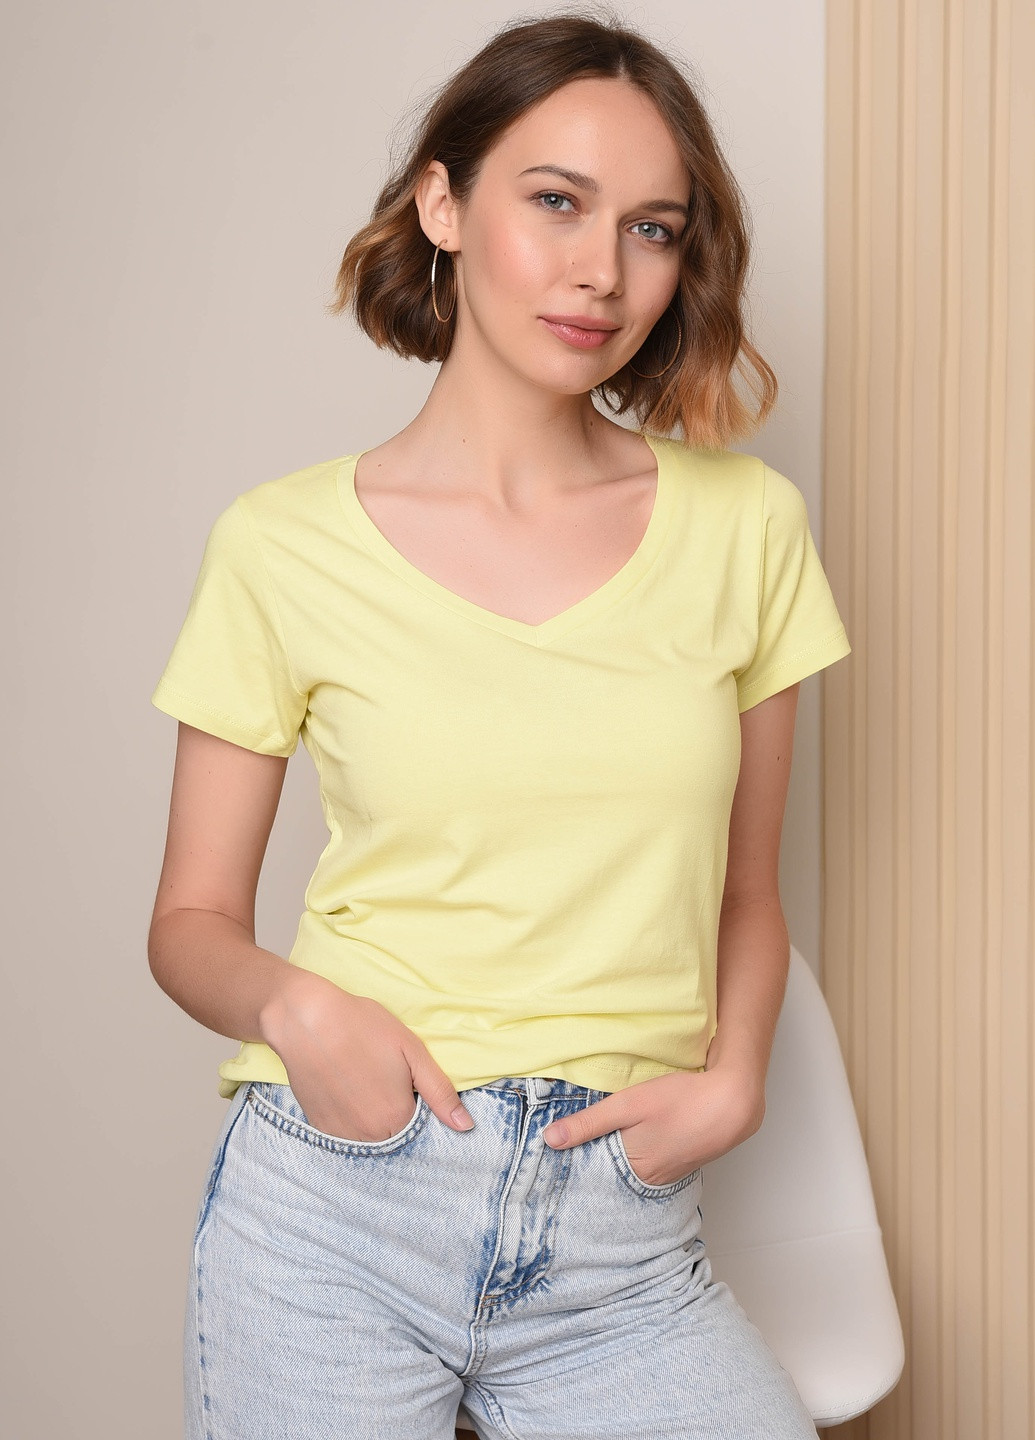 Жовта літня футболка Let's Shop